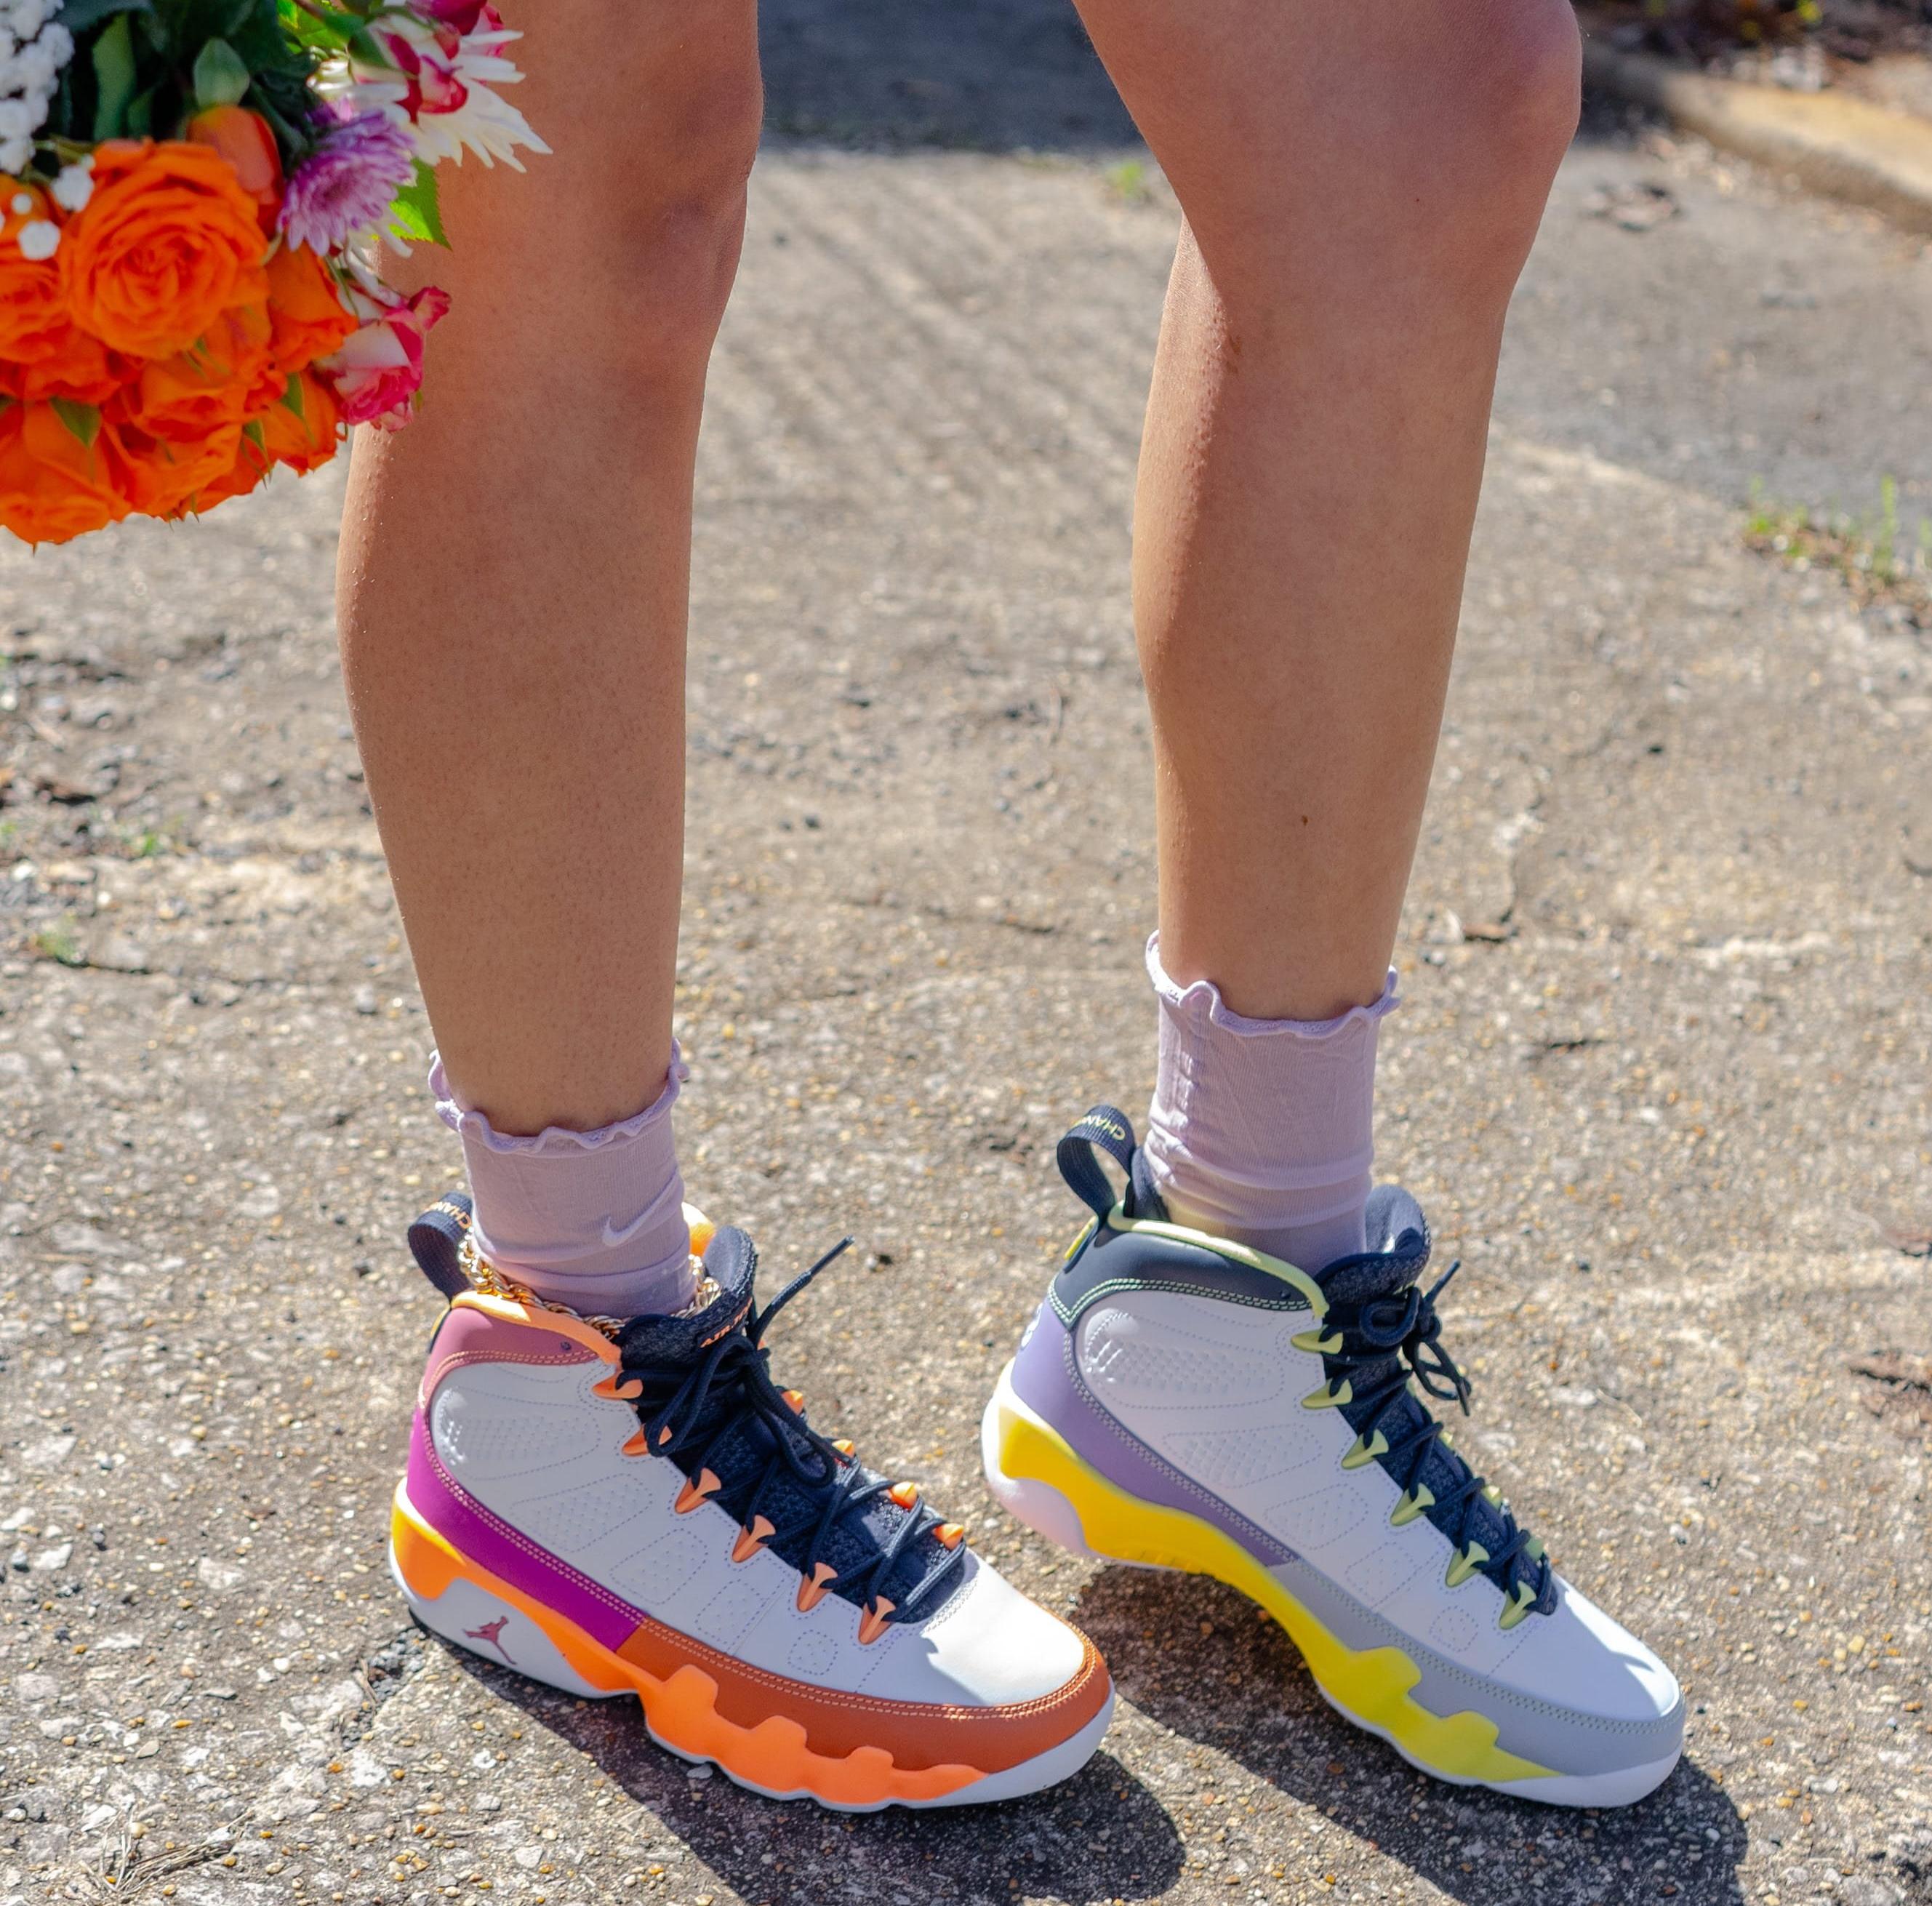 Sneakers Release – “Change the World” 9 Retro, Women's-Exclusive